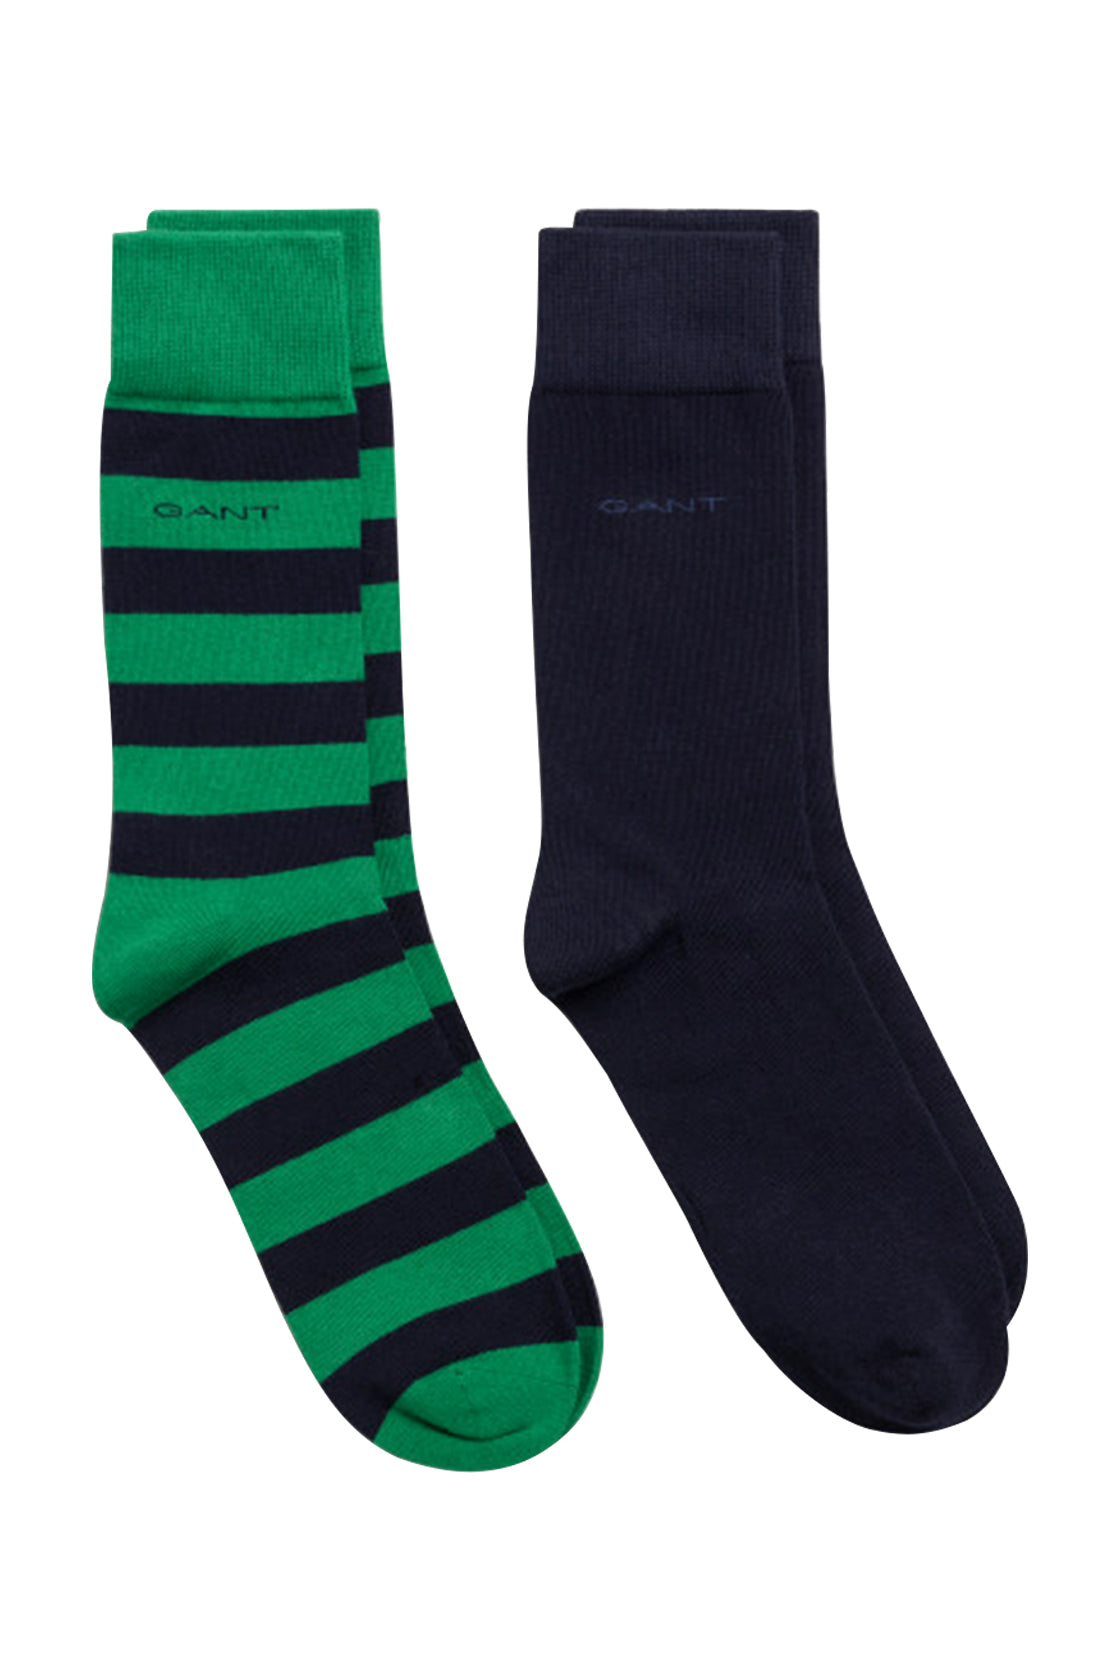 Gant Barstripe & Solid Socks 2Pk Lavish Green